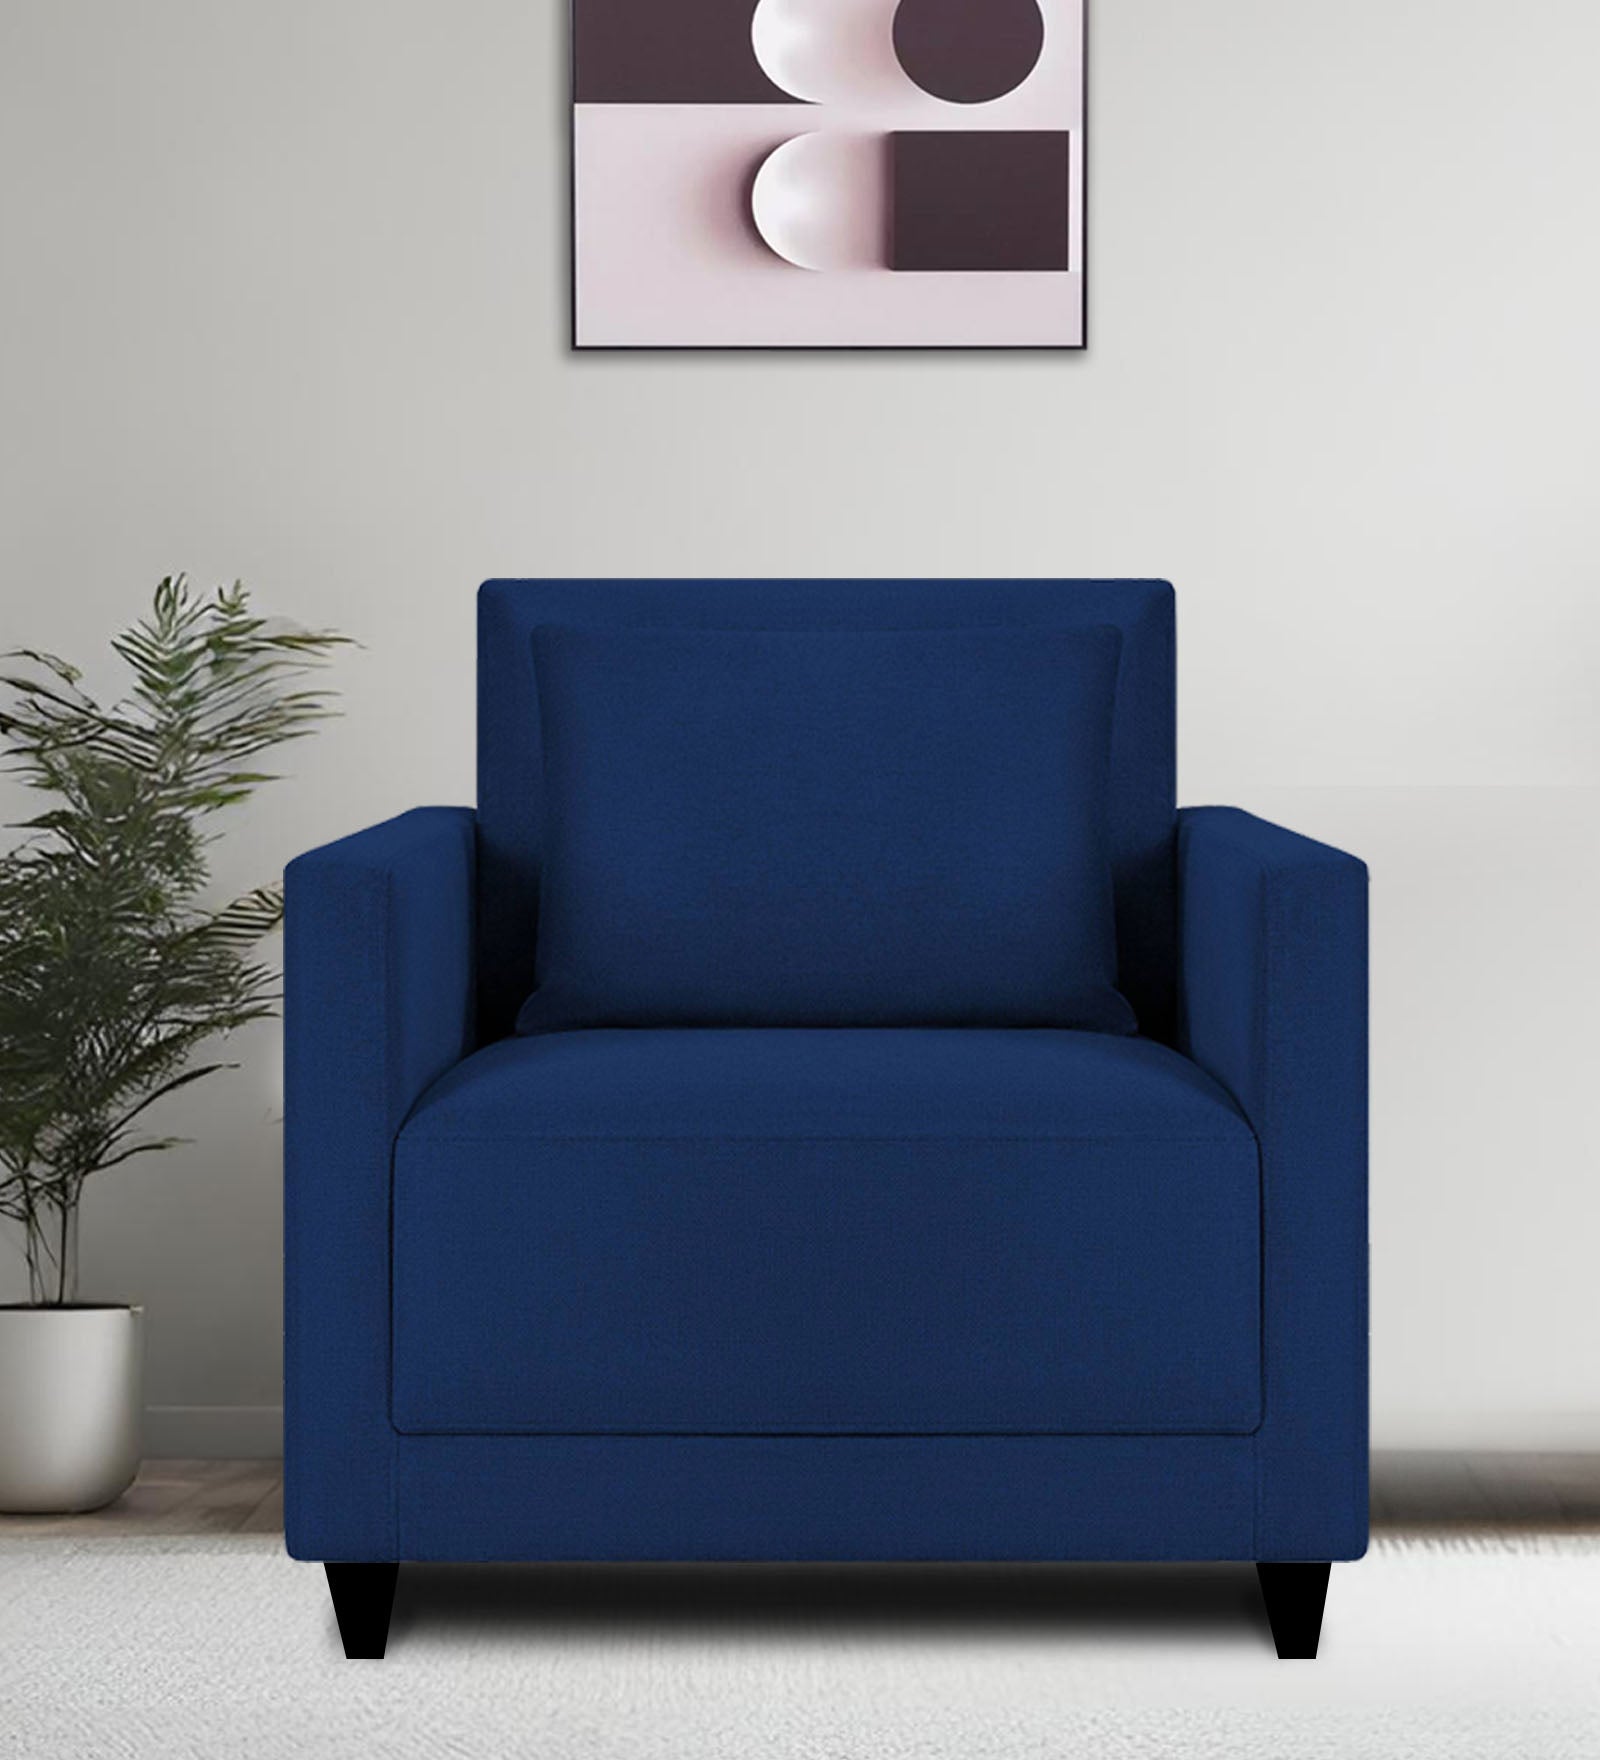 Kera Fabric 1 Seater Sofa in Royal Blue Colour